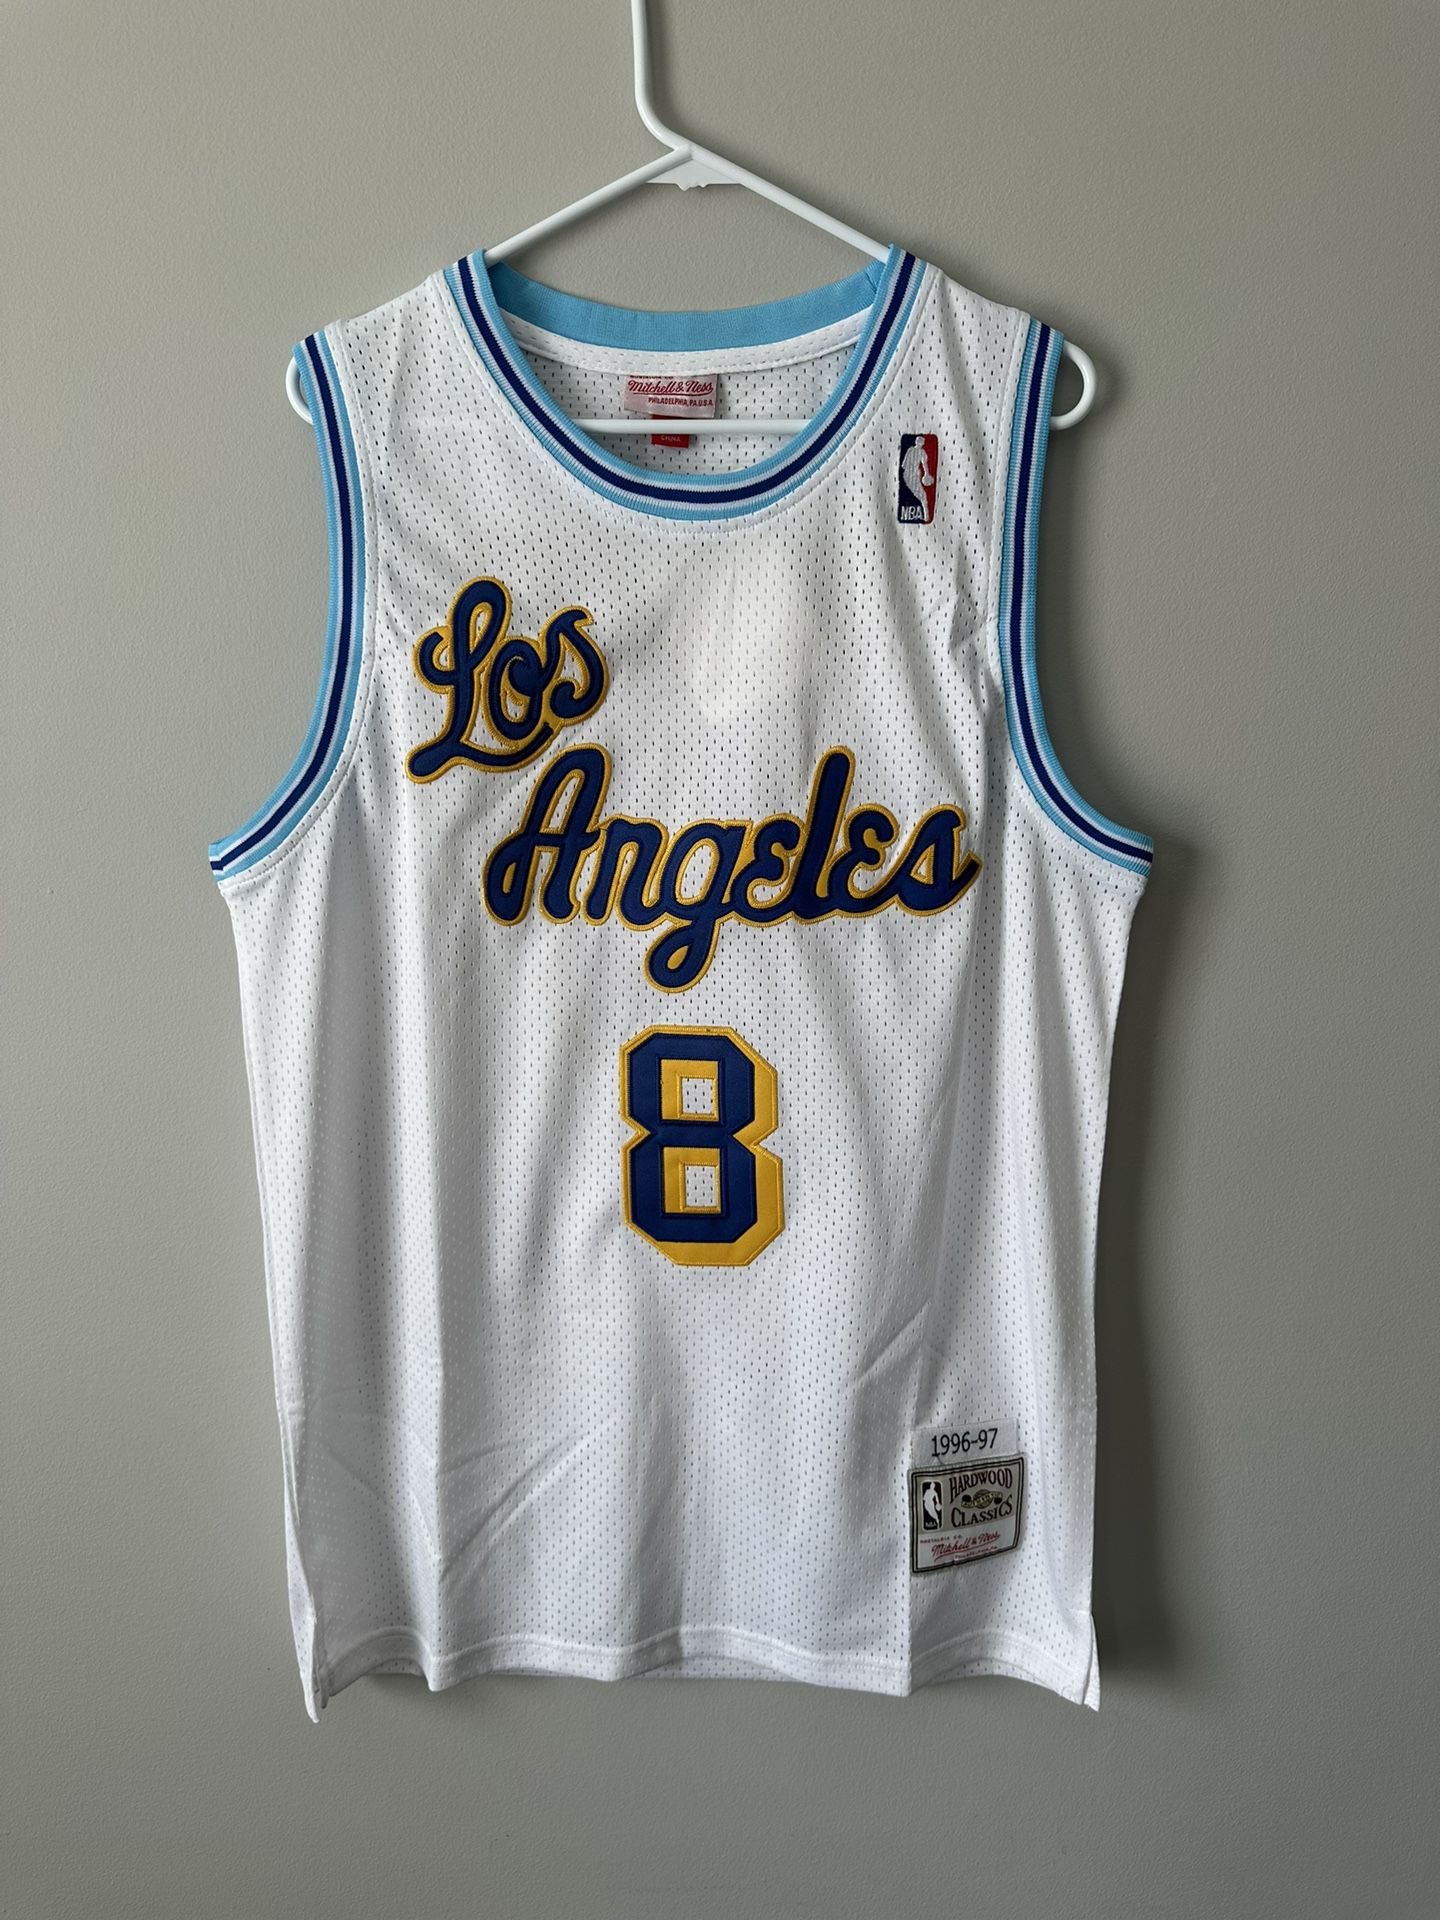 Kobe Bryant Los Angeles Lakers Retro Vintage NBA Basketball Jersey - STITCHED - Brand New - Men’s - Size L / XL